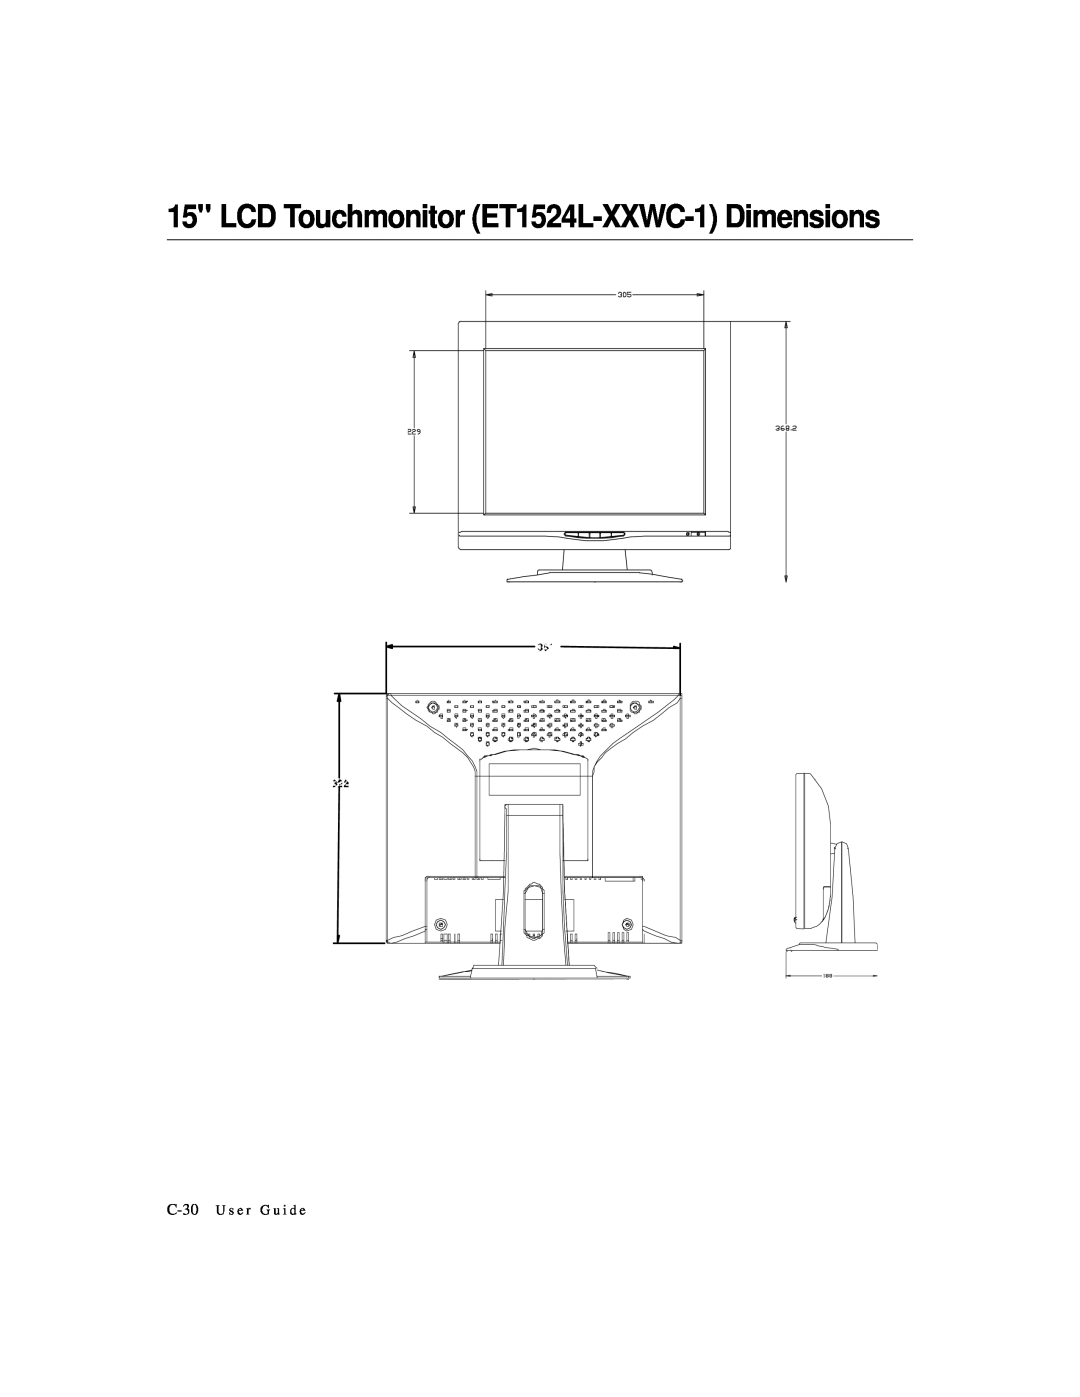 Elo TouchSystems manual LCD Touchmonitor ET1524L-XXWC-1 Dimensions, C-30 U s e r G u i d e 